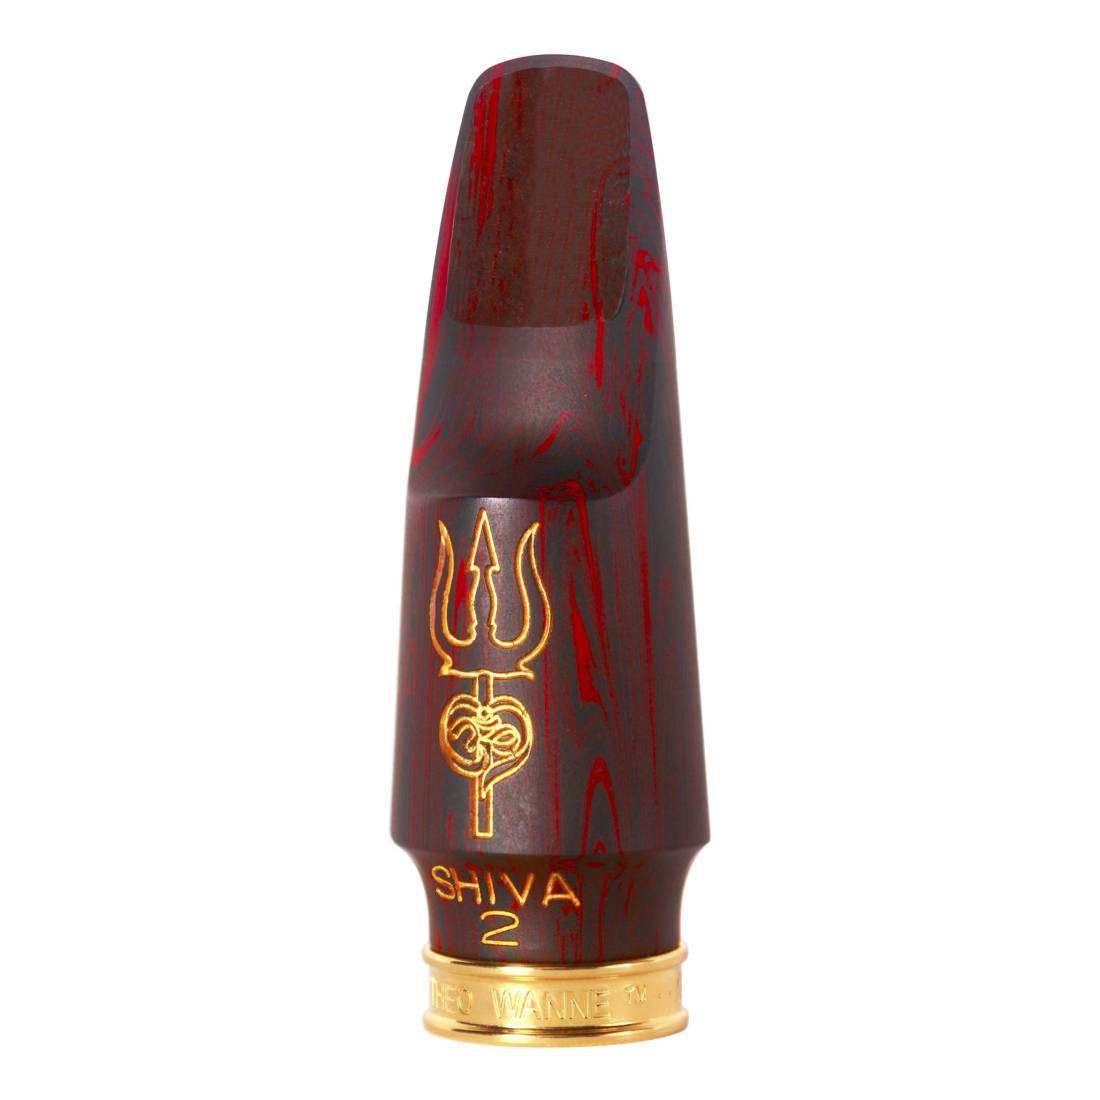 Shiva 2 Alto Saxophone Mouthpiece - Red Marble Hard Rubber 7